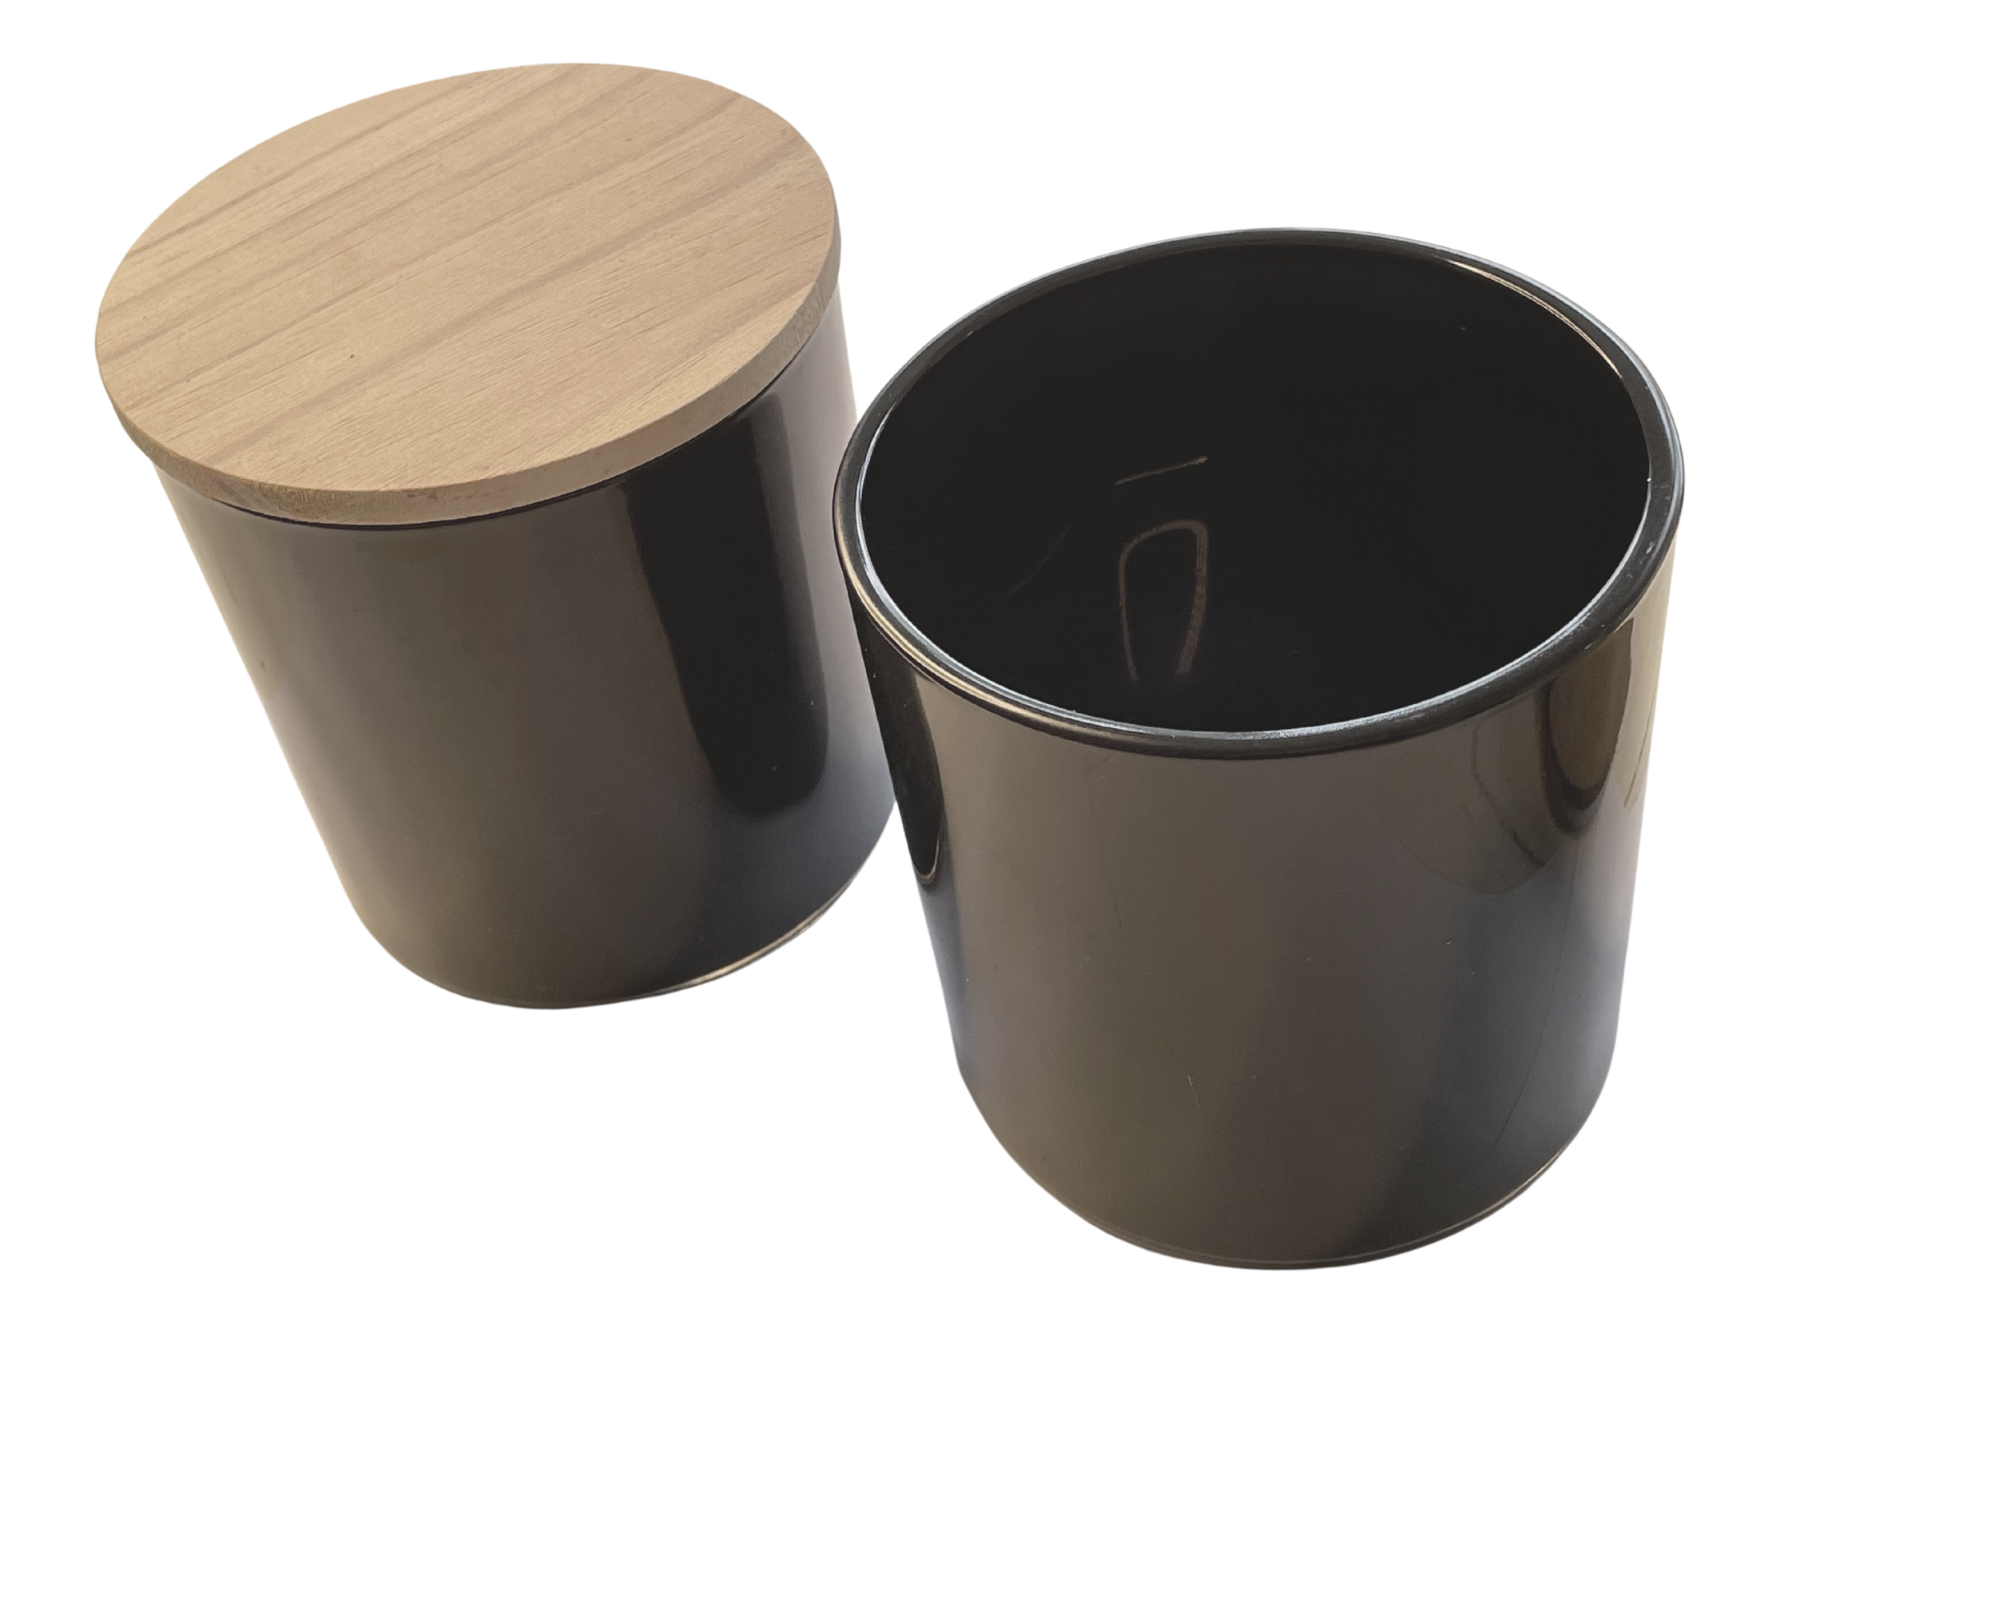 EXTRA LARGE Wood lid - Bamboo